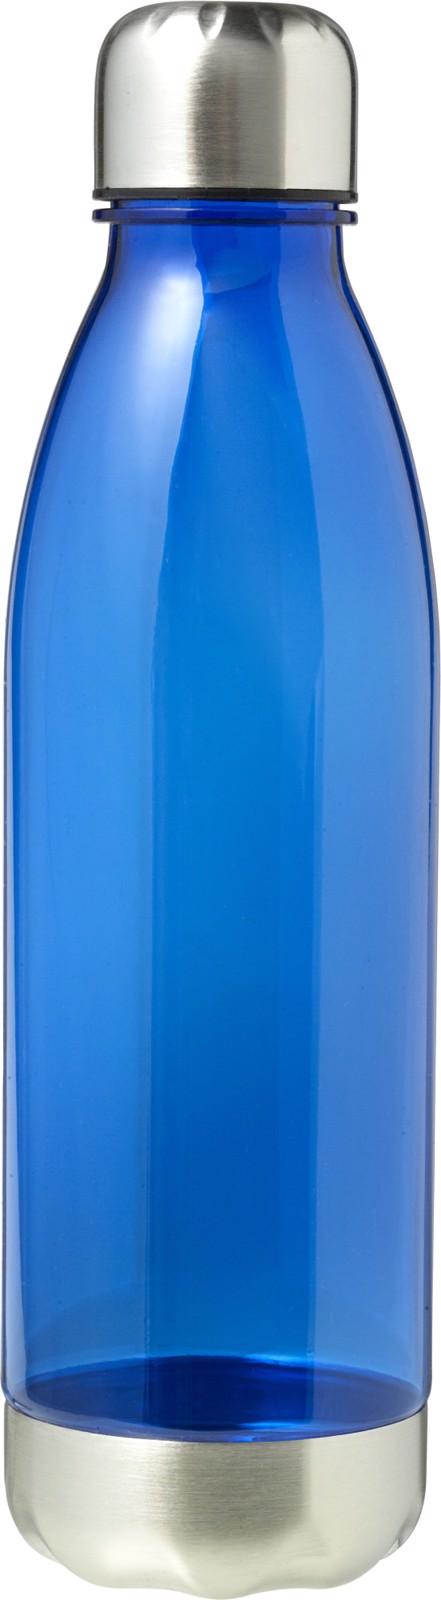 AS bottle - Cobalt Blue